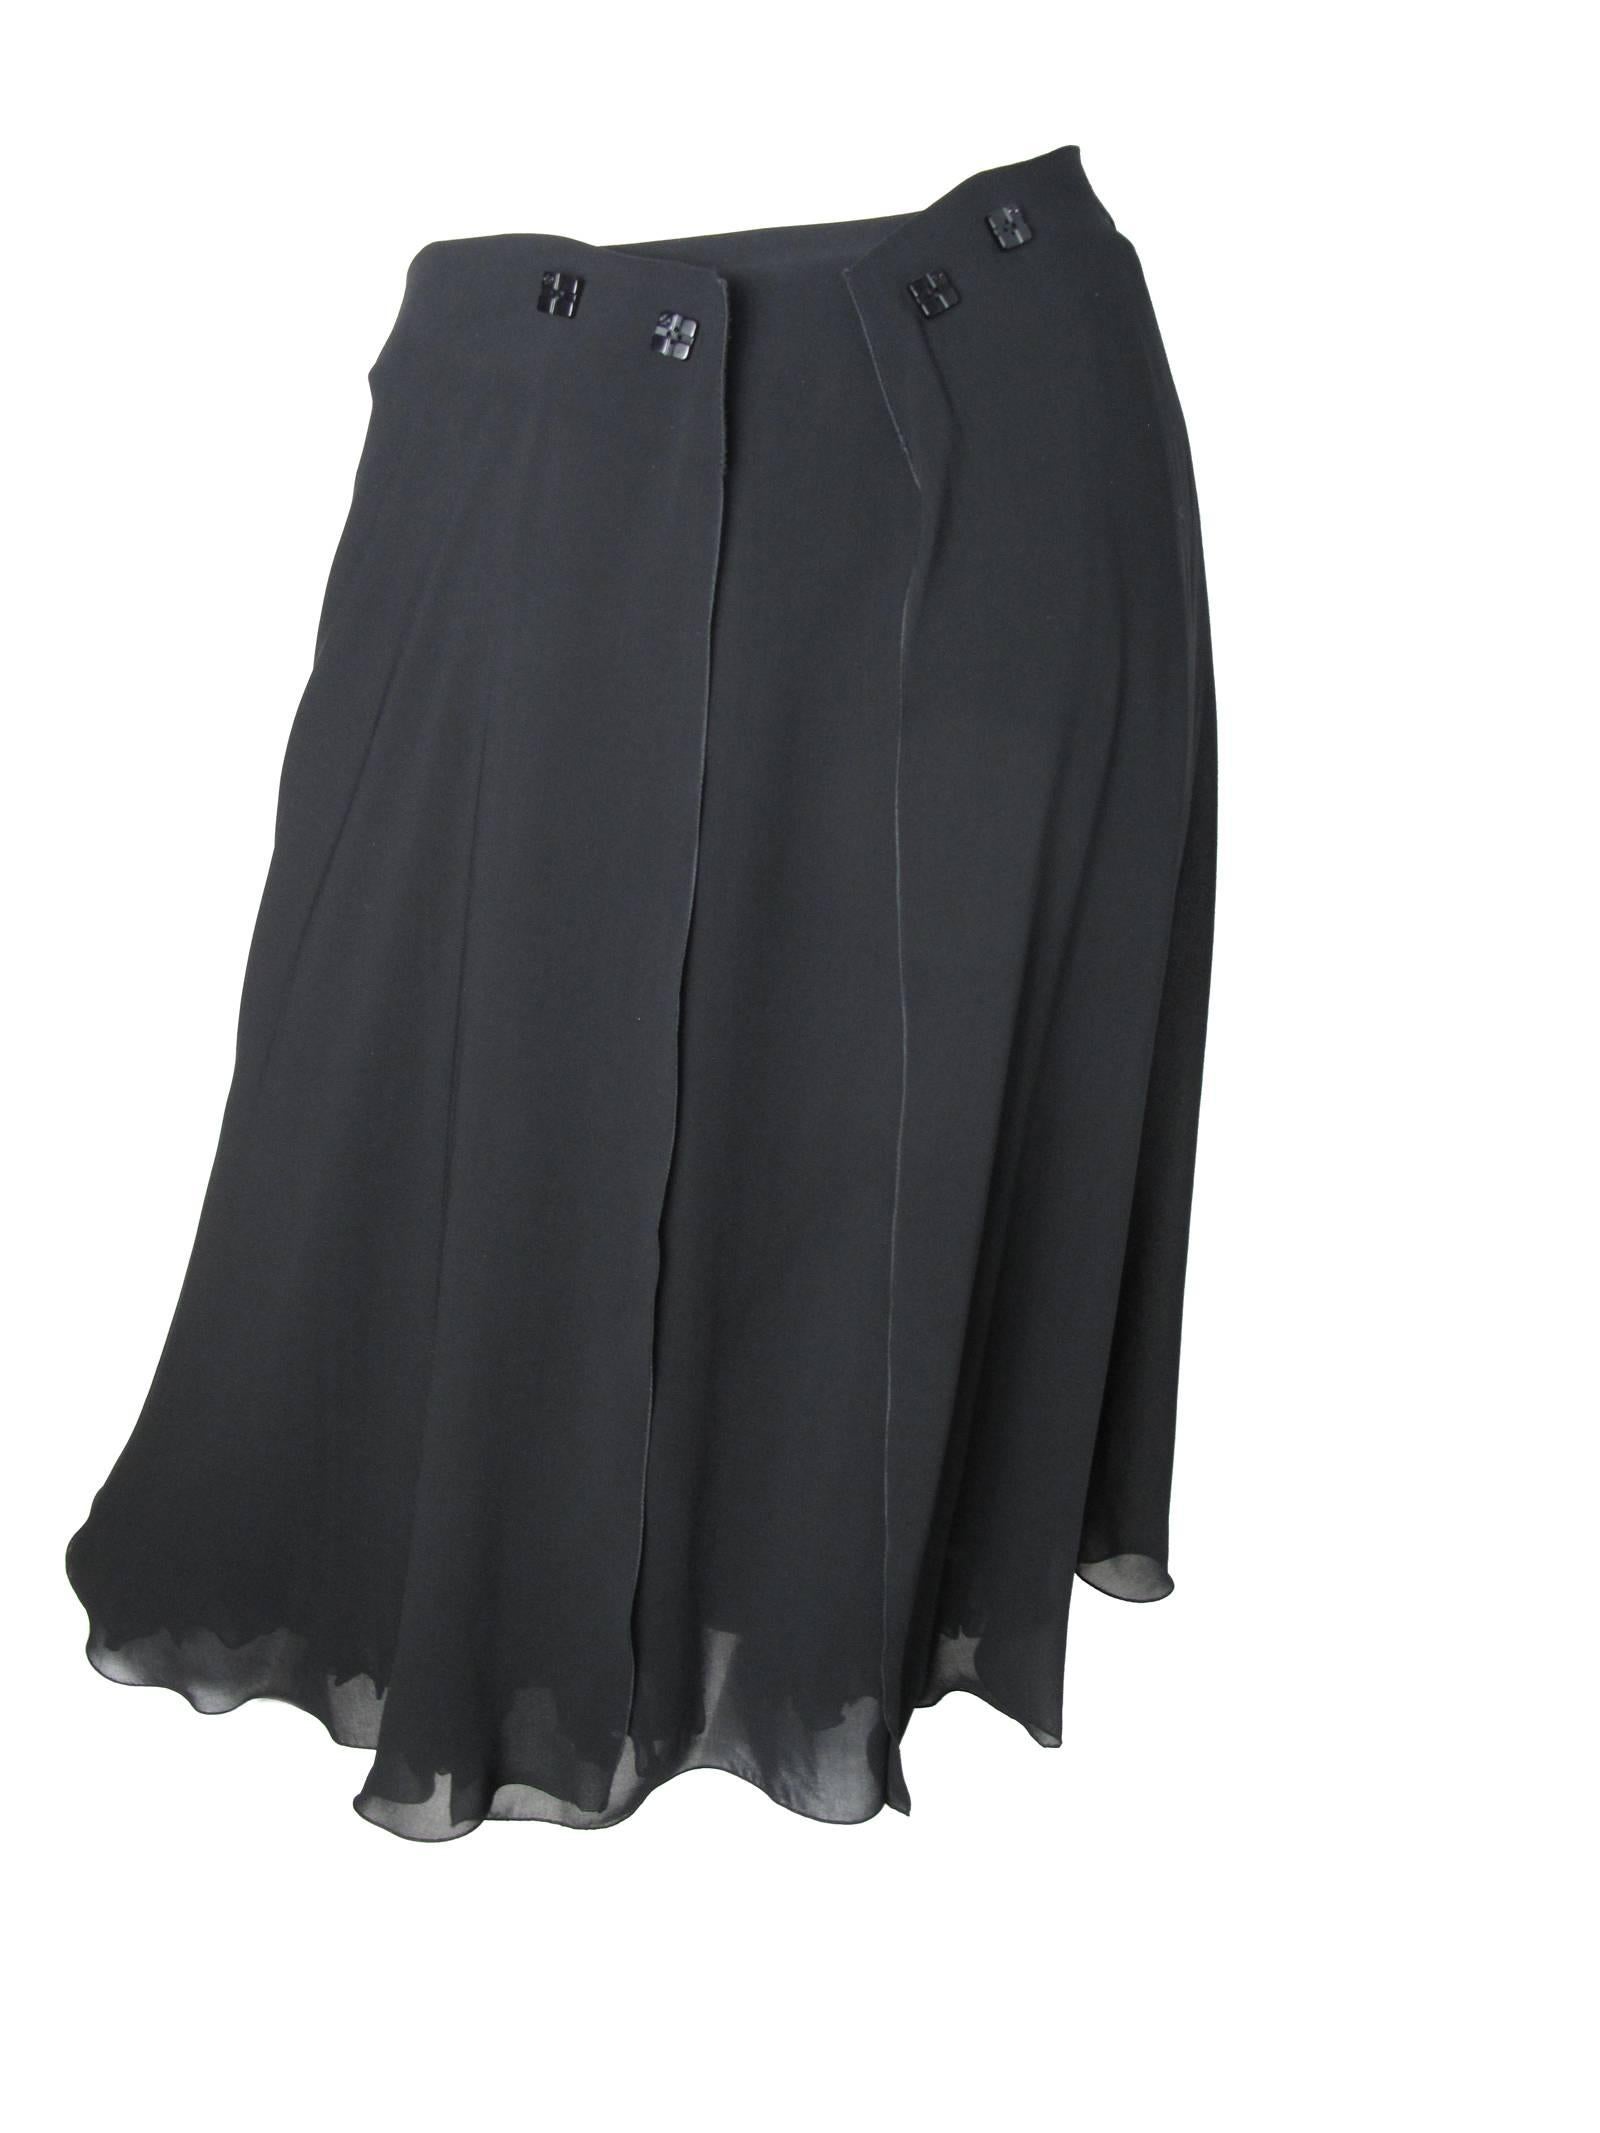 Black Chanel black silk chiffon skirt